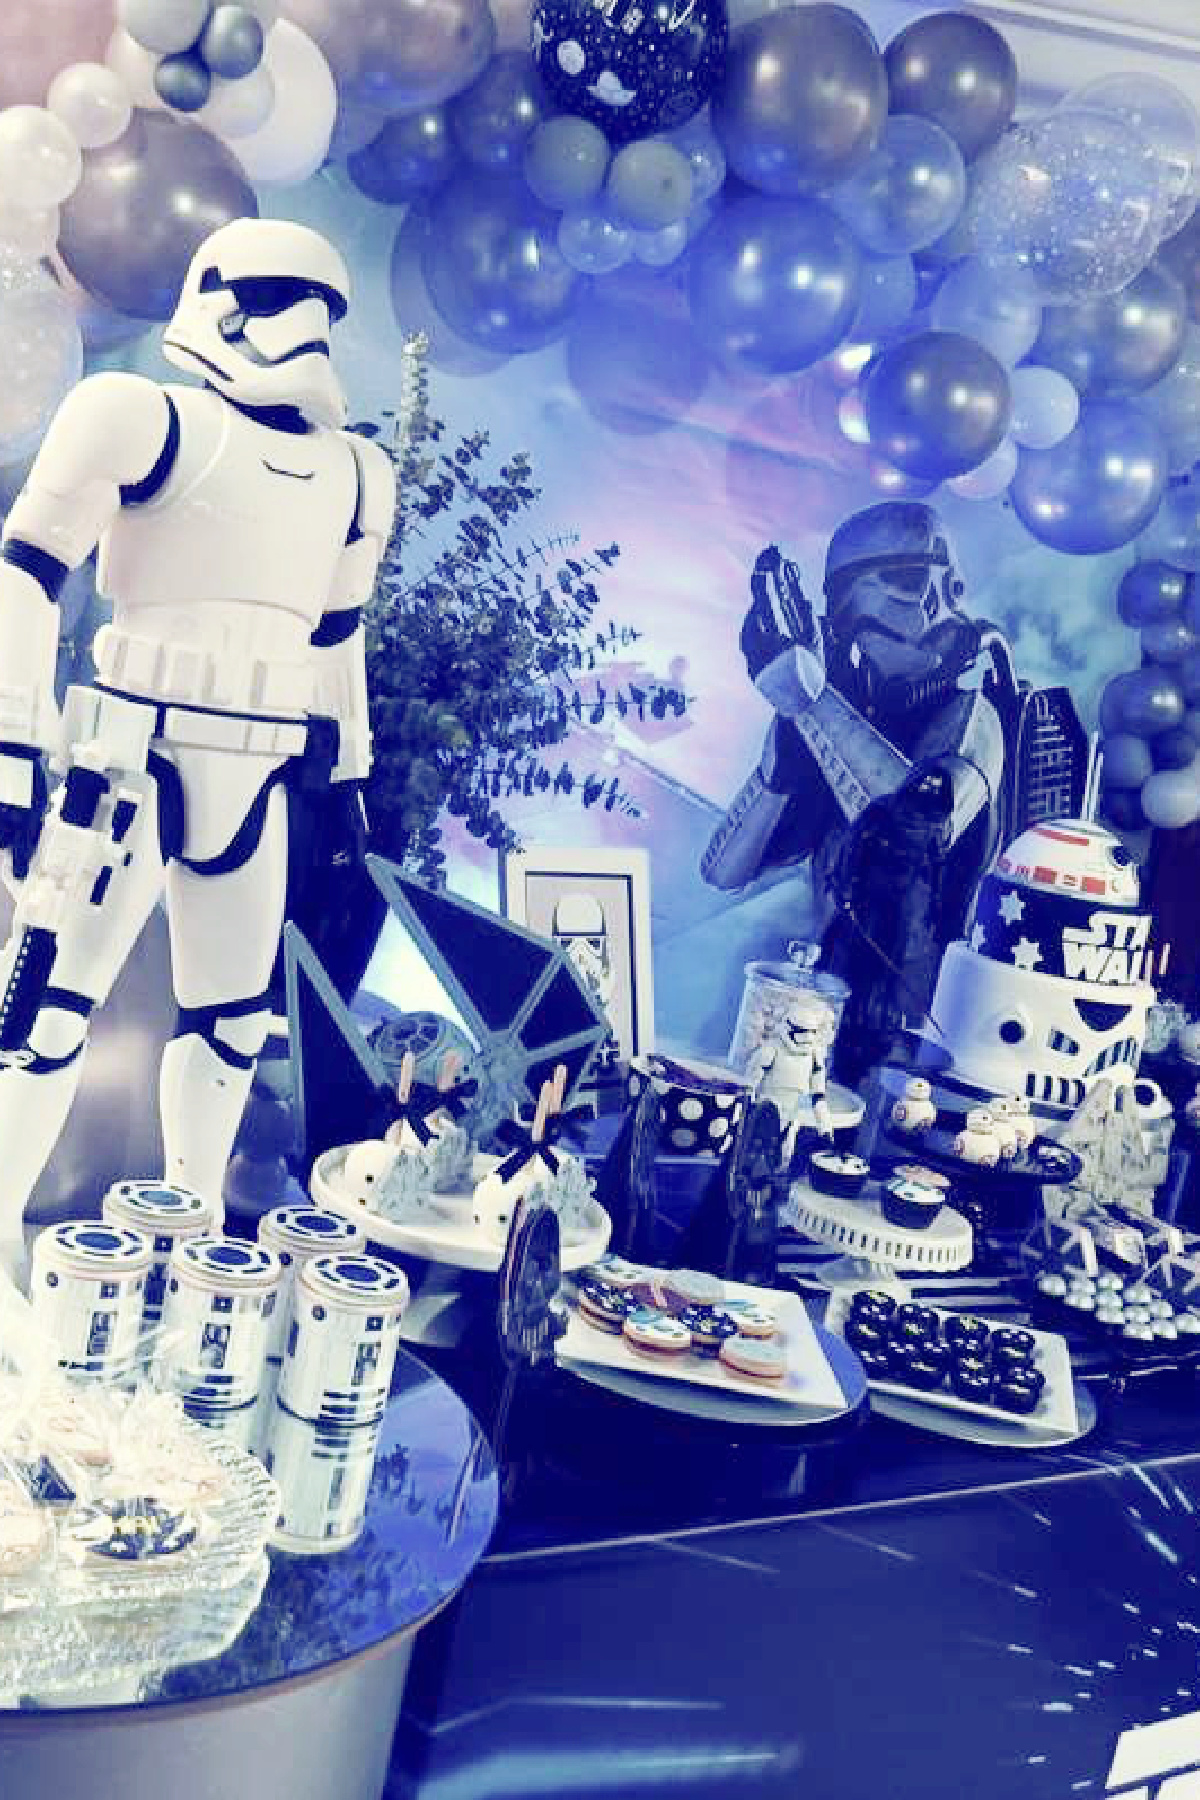 Star Wars birthday party